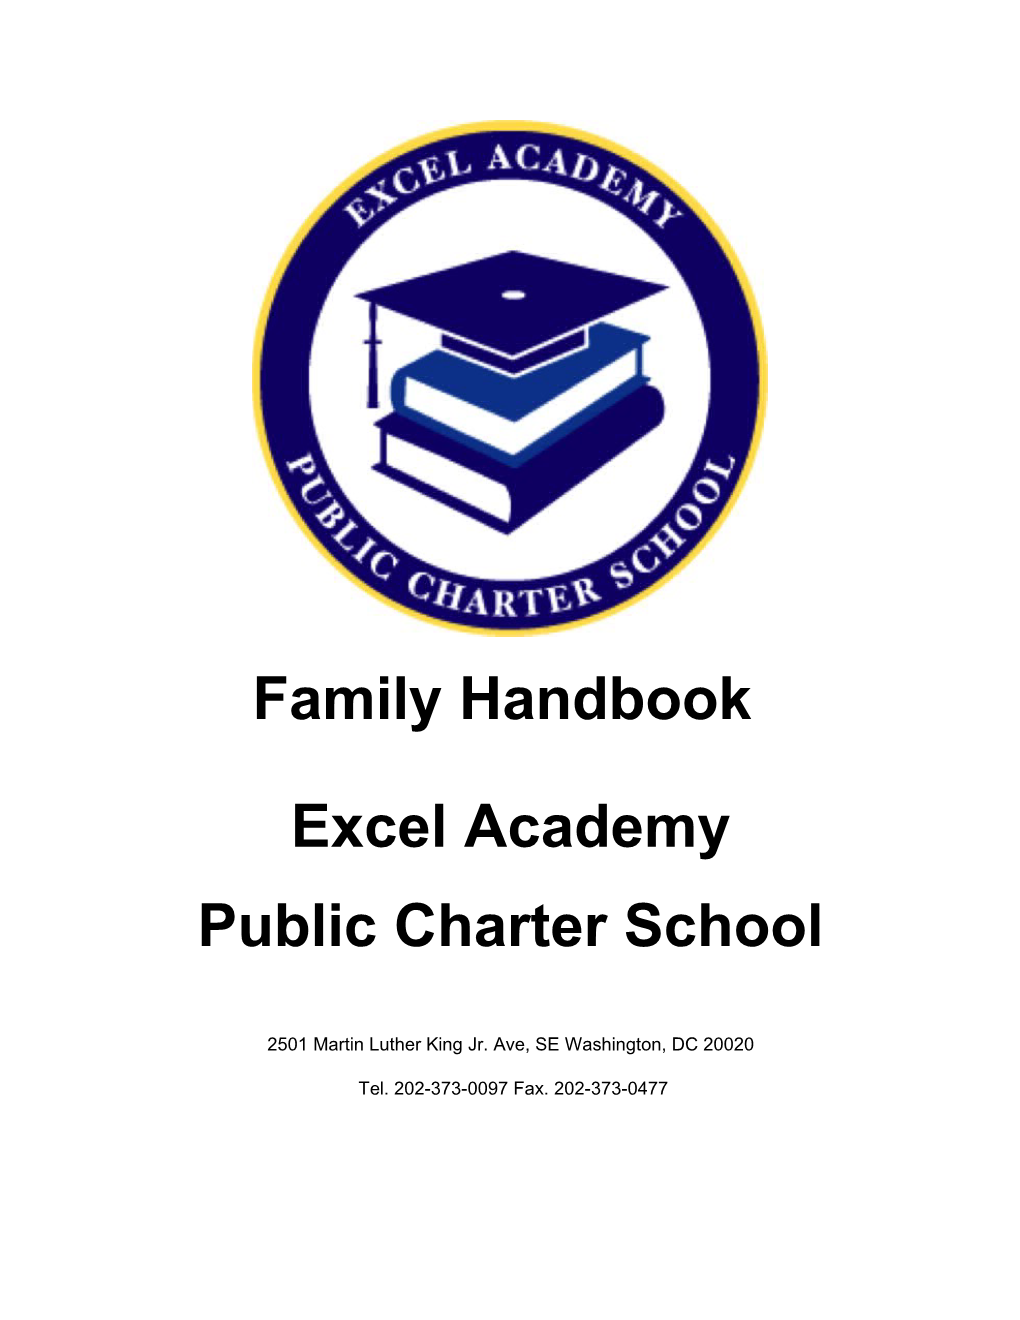 Formal Acknowledgement of Family Handbook